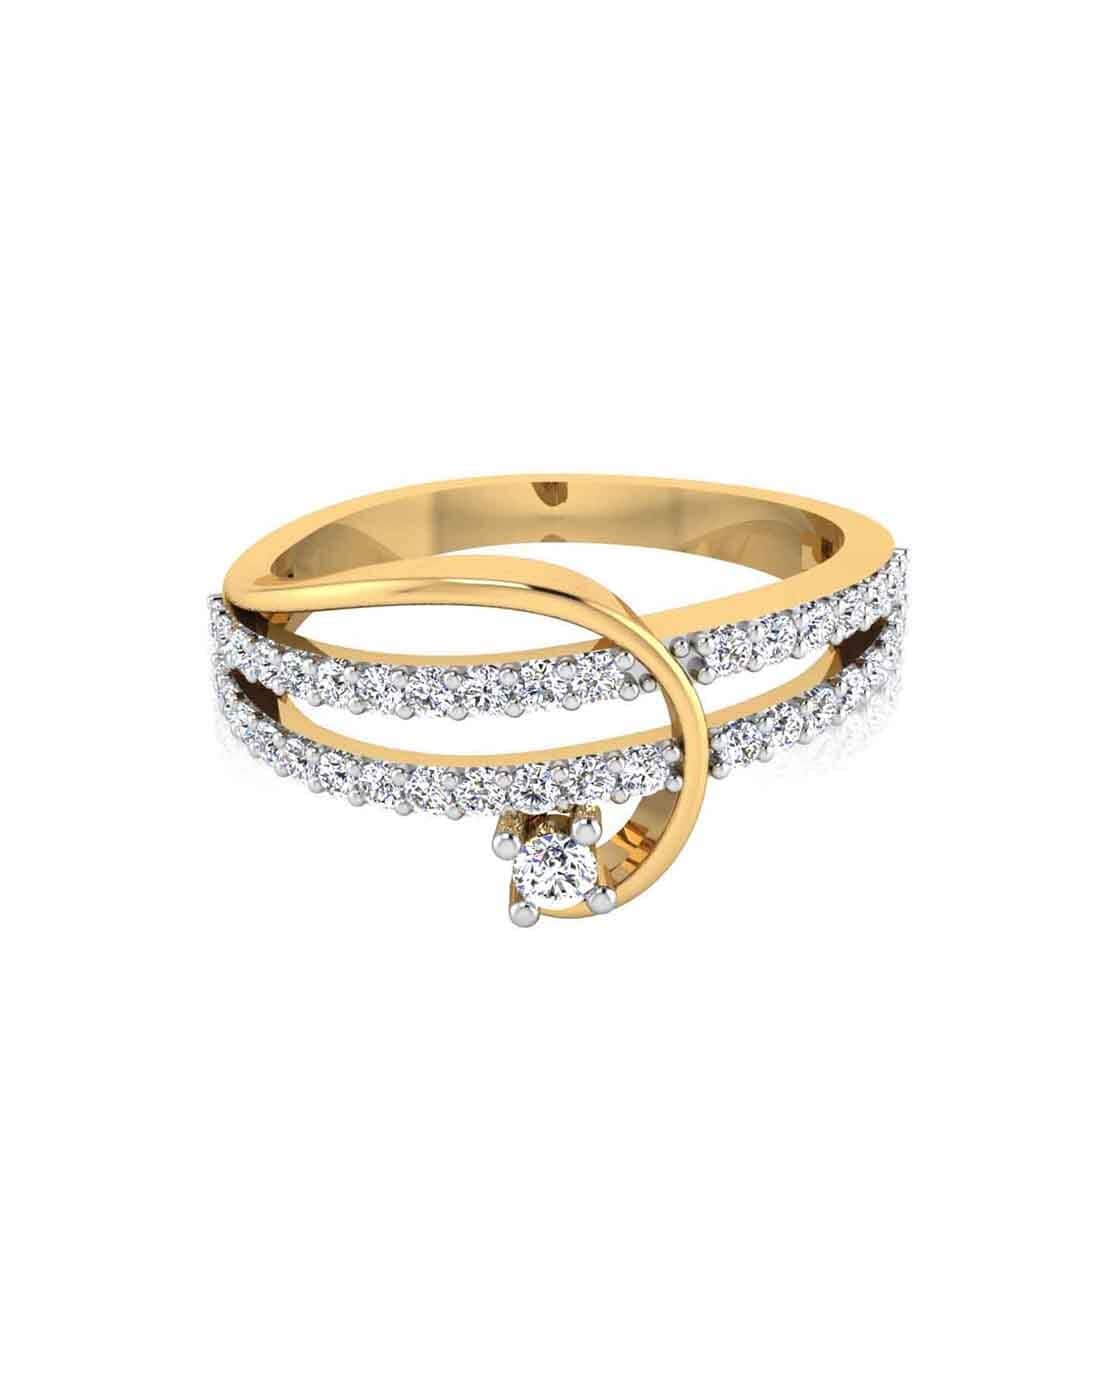 Shop 14K White Gold Diamond Engagement Rings for Women at PC Chandra